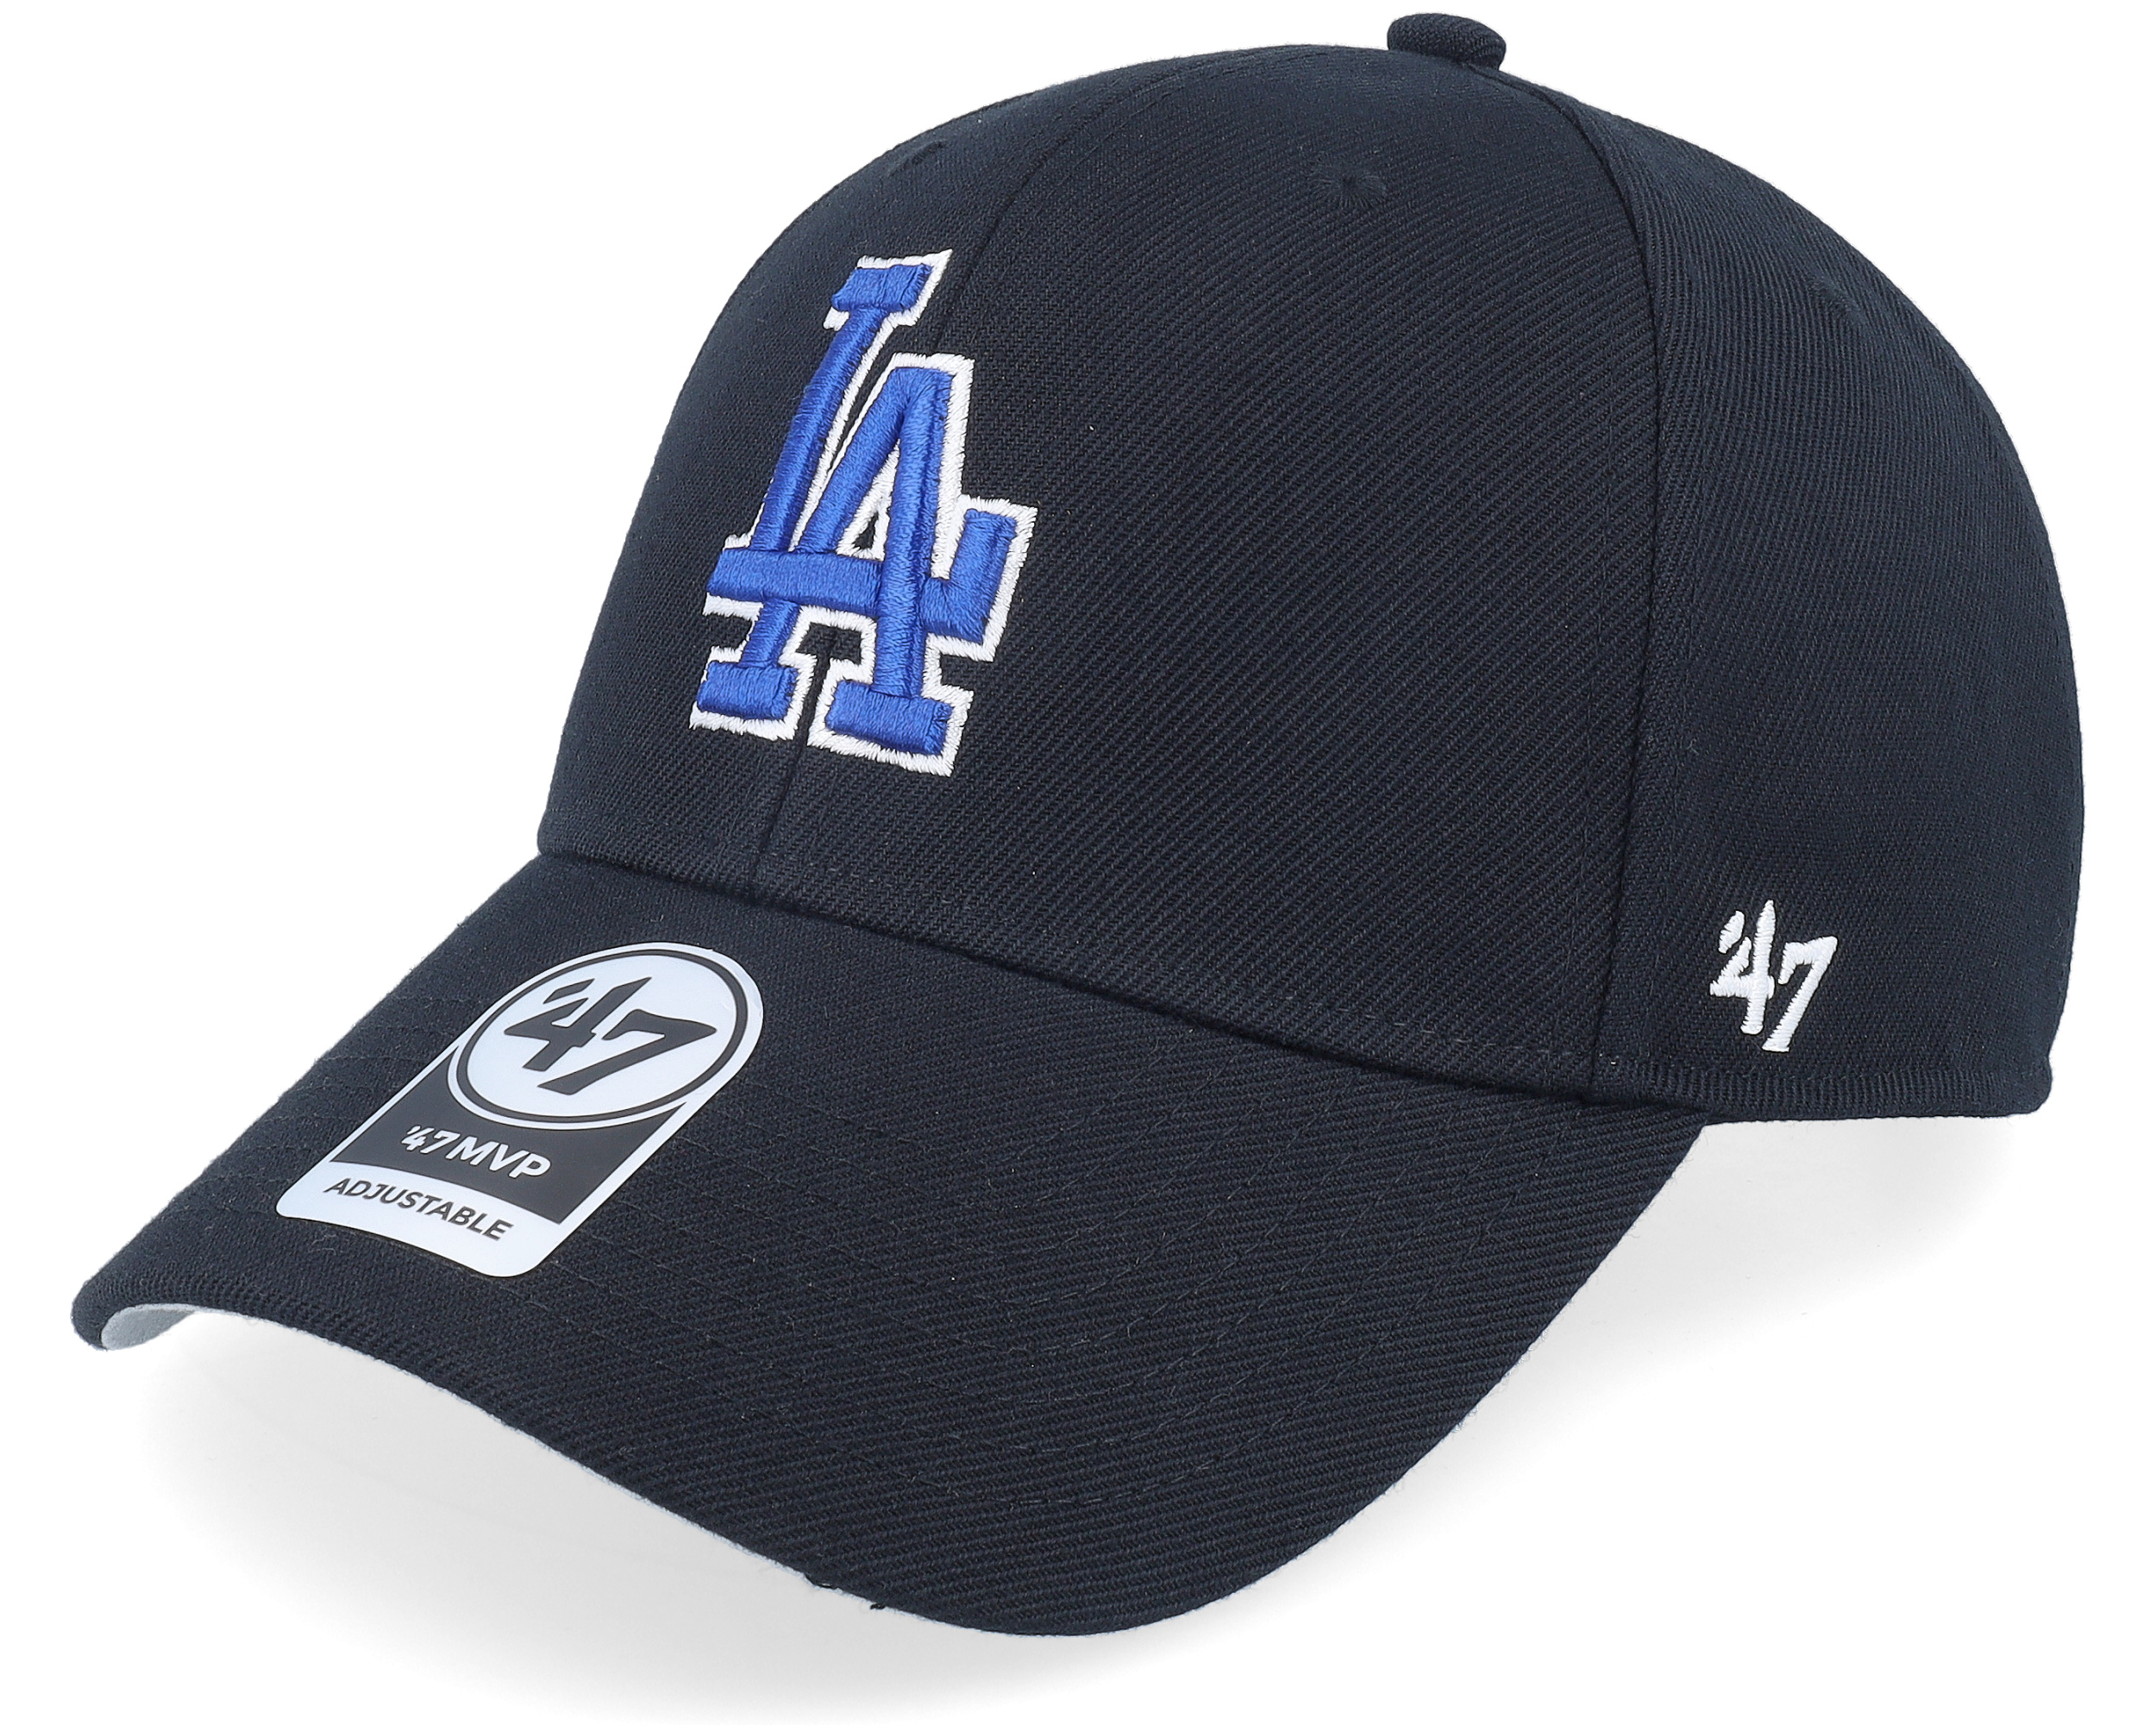 Los Angeles Dodgers Mvp Black/Blue Adjustable - 47 Brand caps